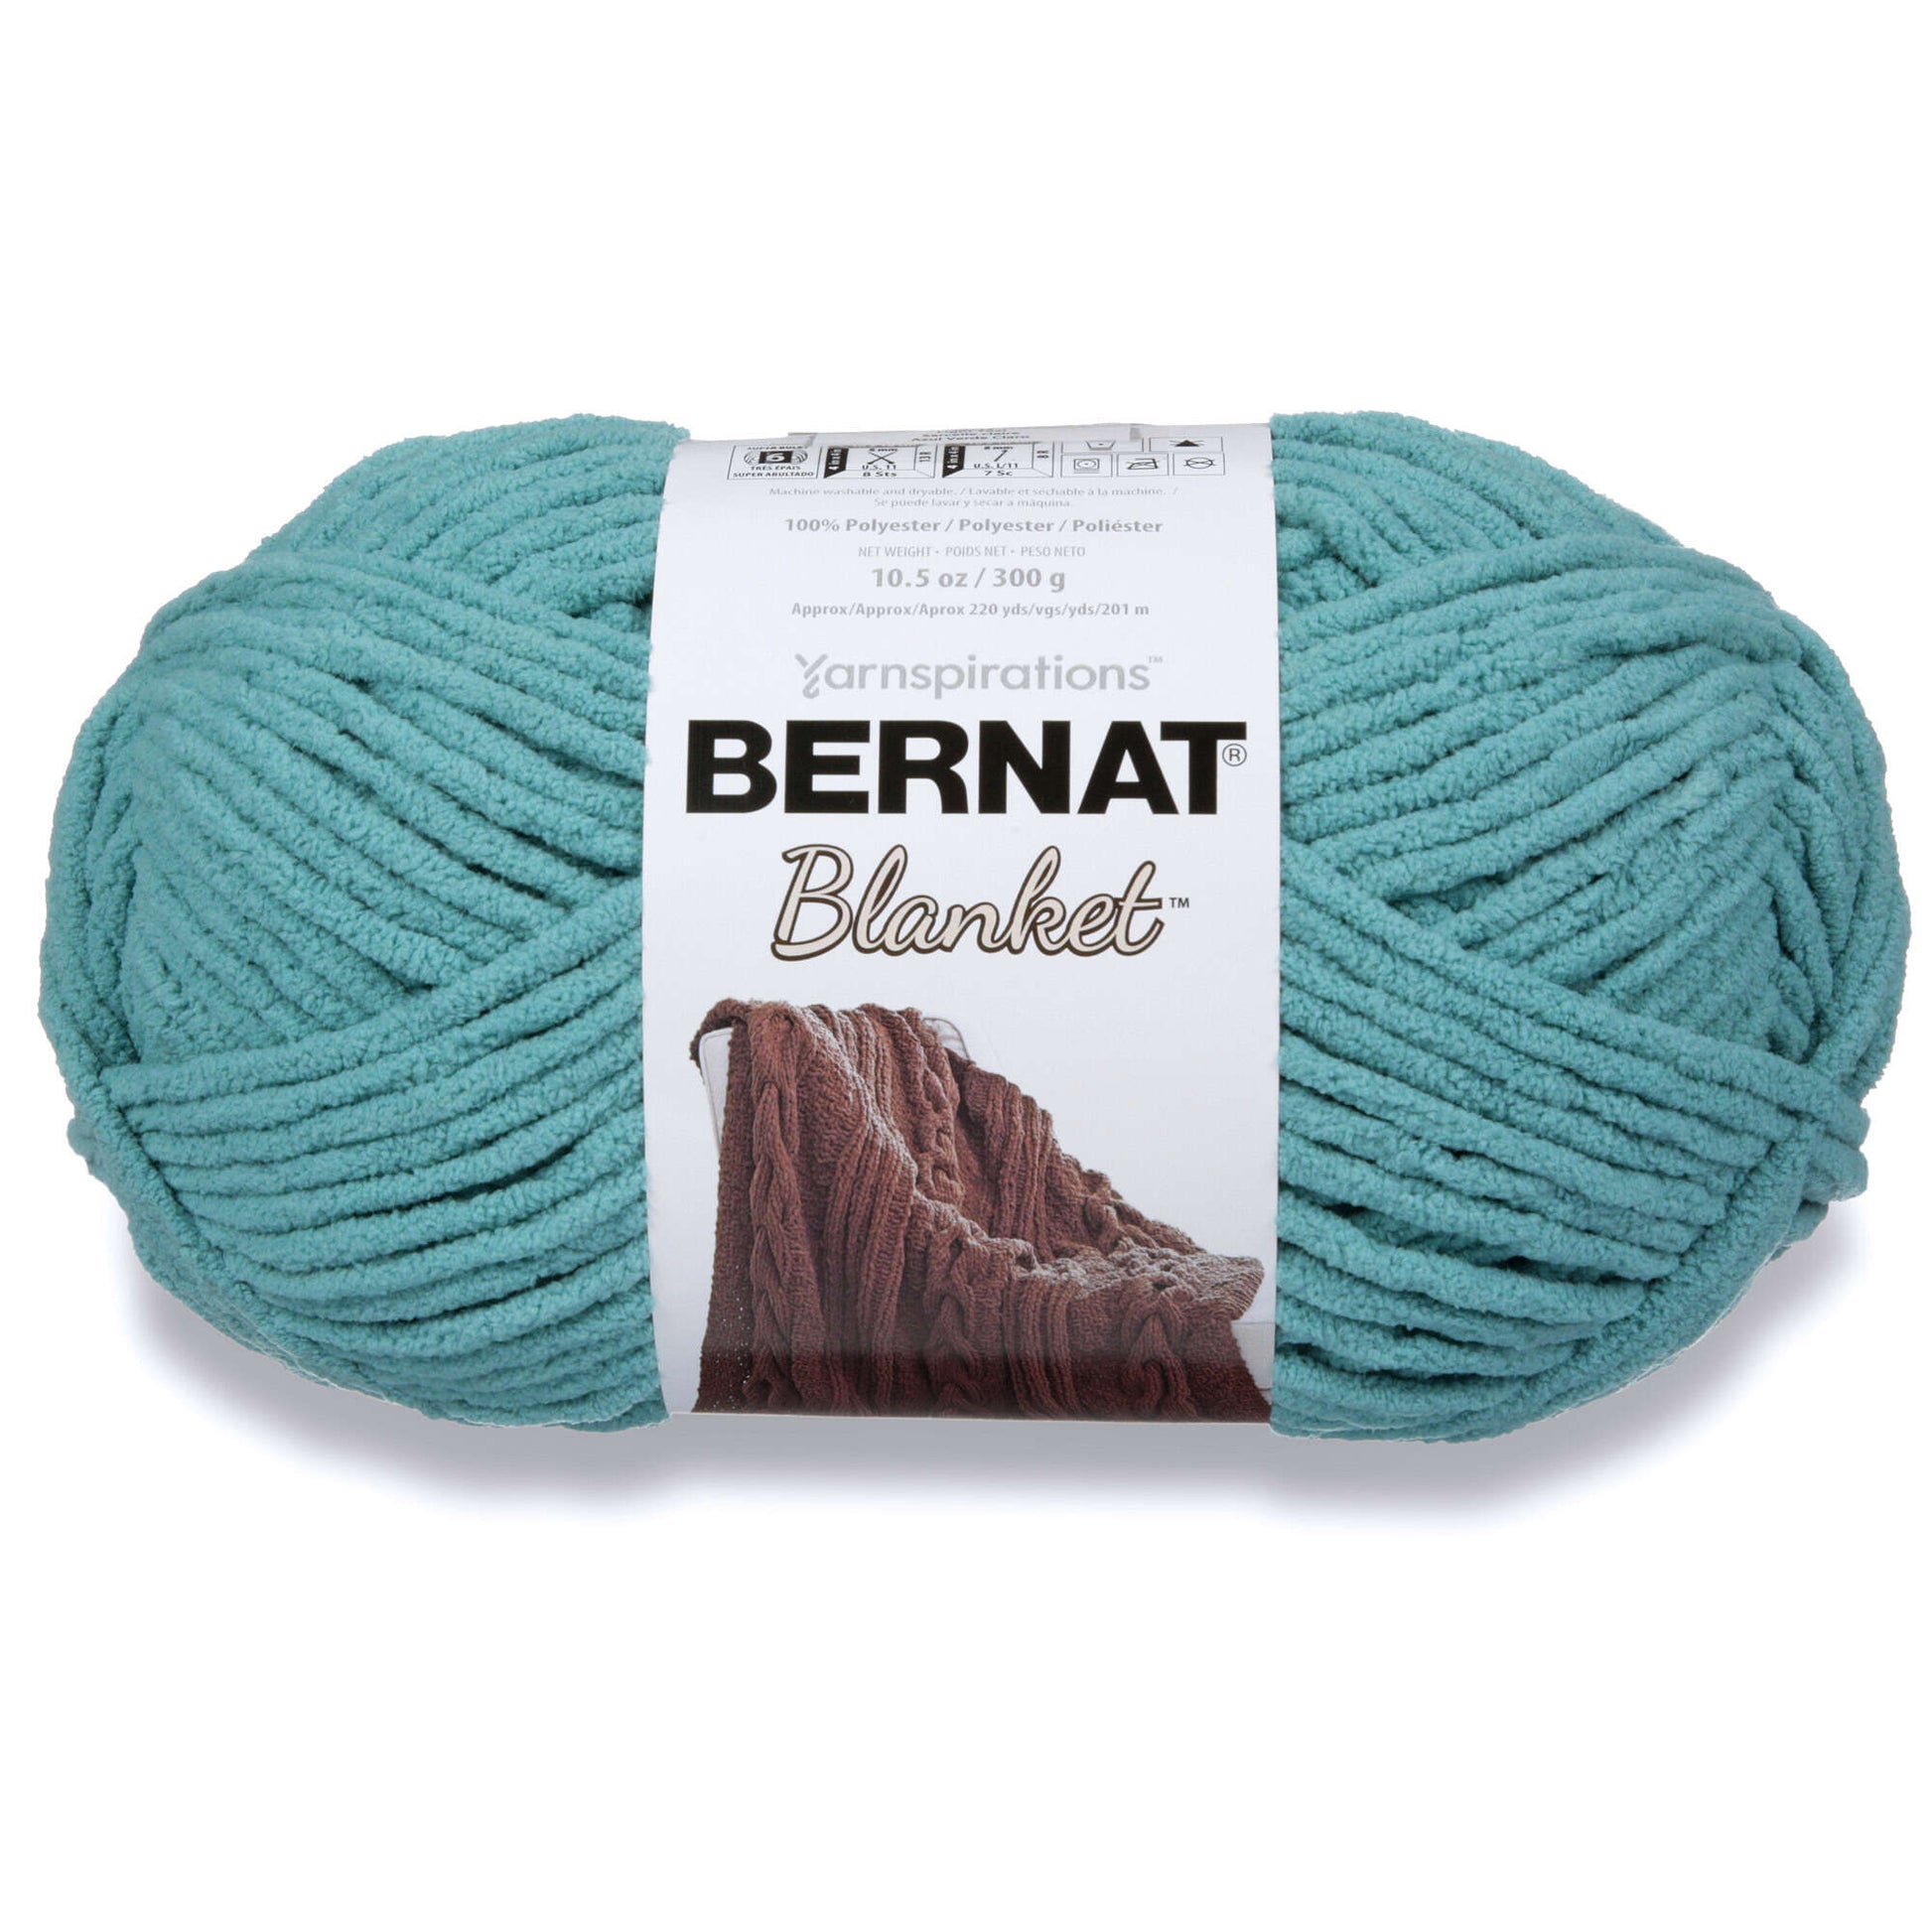 Bernat Blanket Yarn (300g/10.5oz) Light Teal